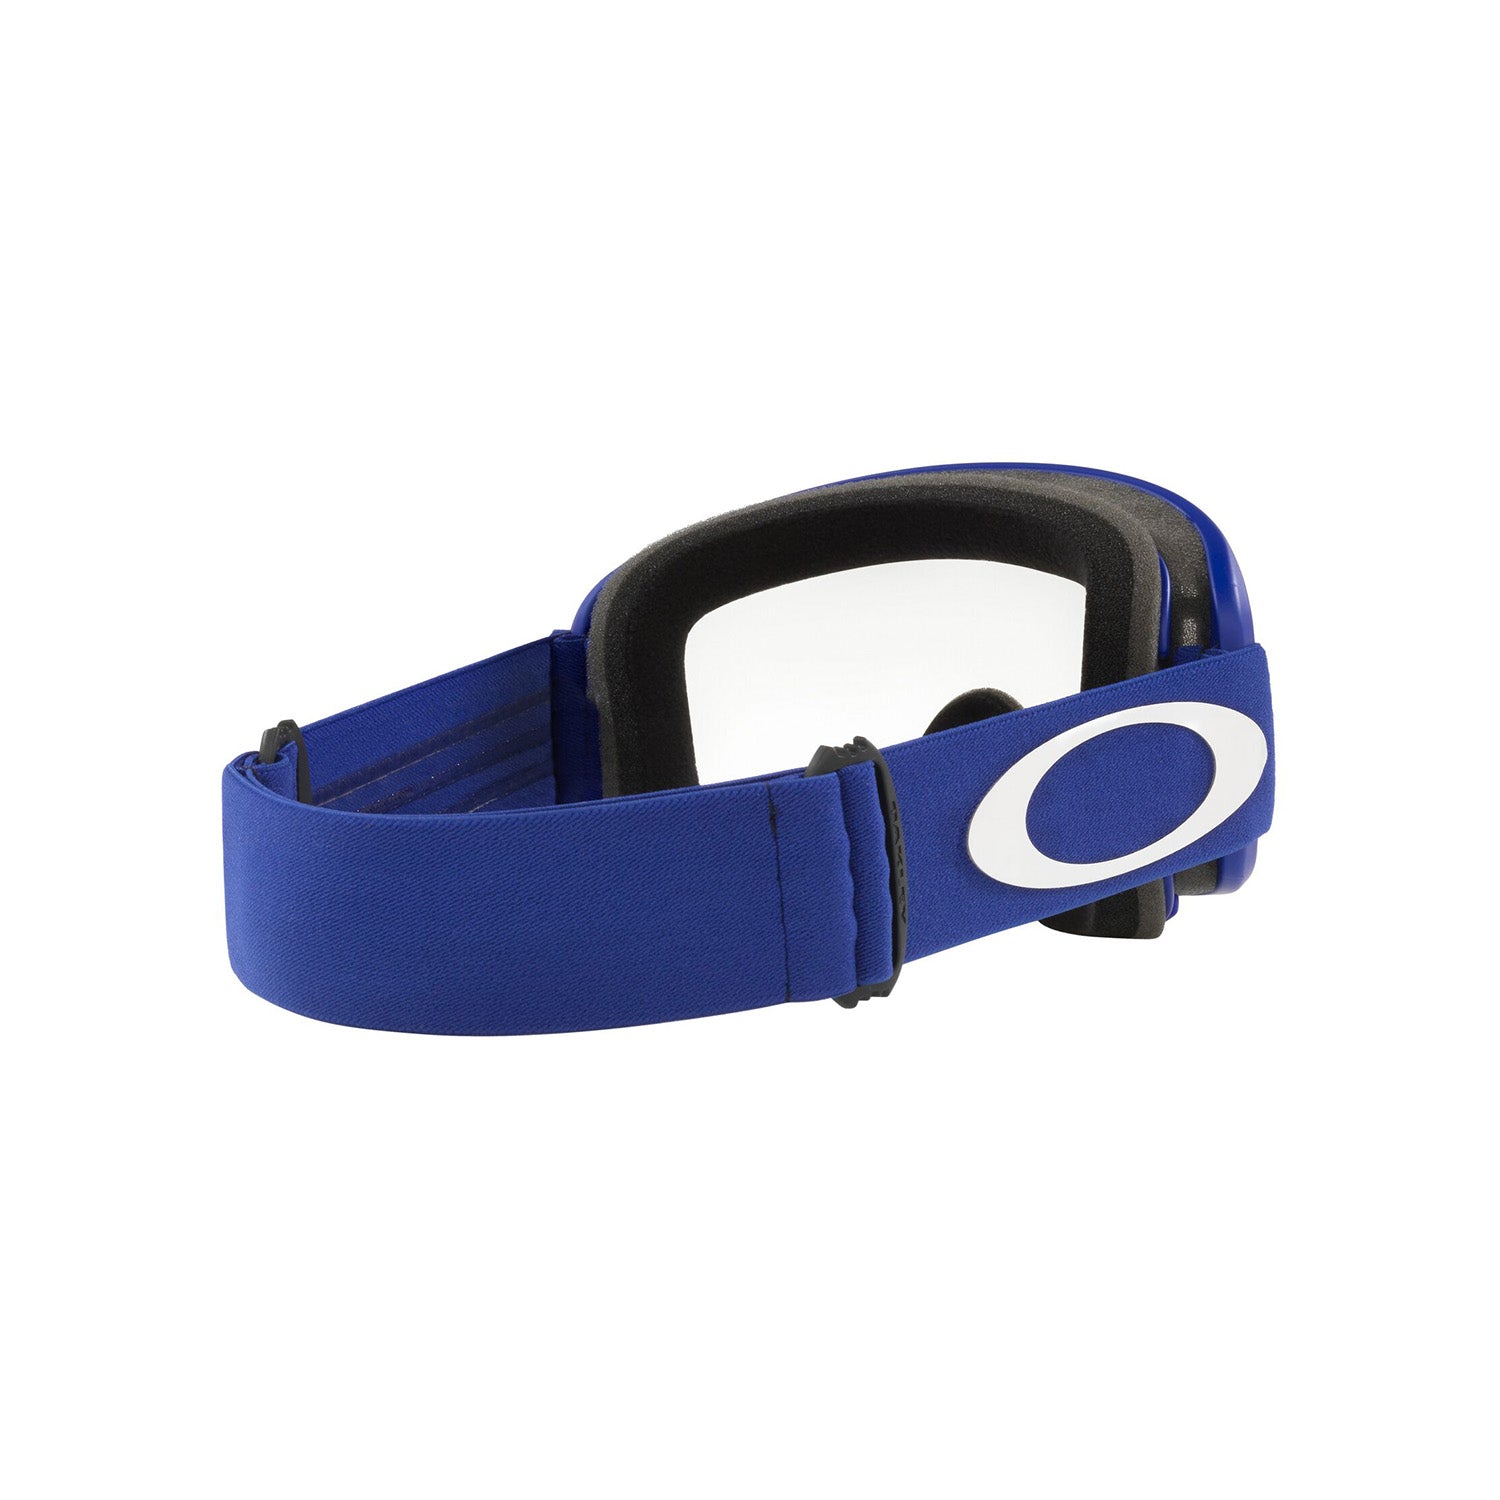 Oakley O Frame 2.0 Pro MX Goggle Moto Blue - Clear Lens